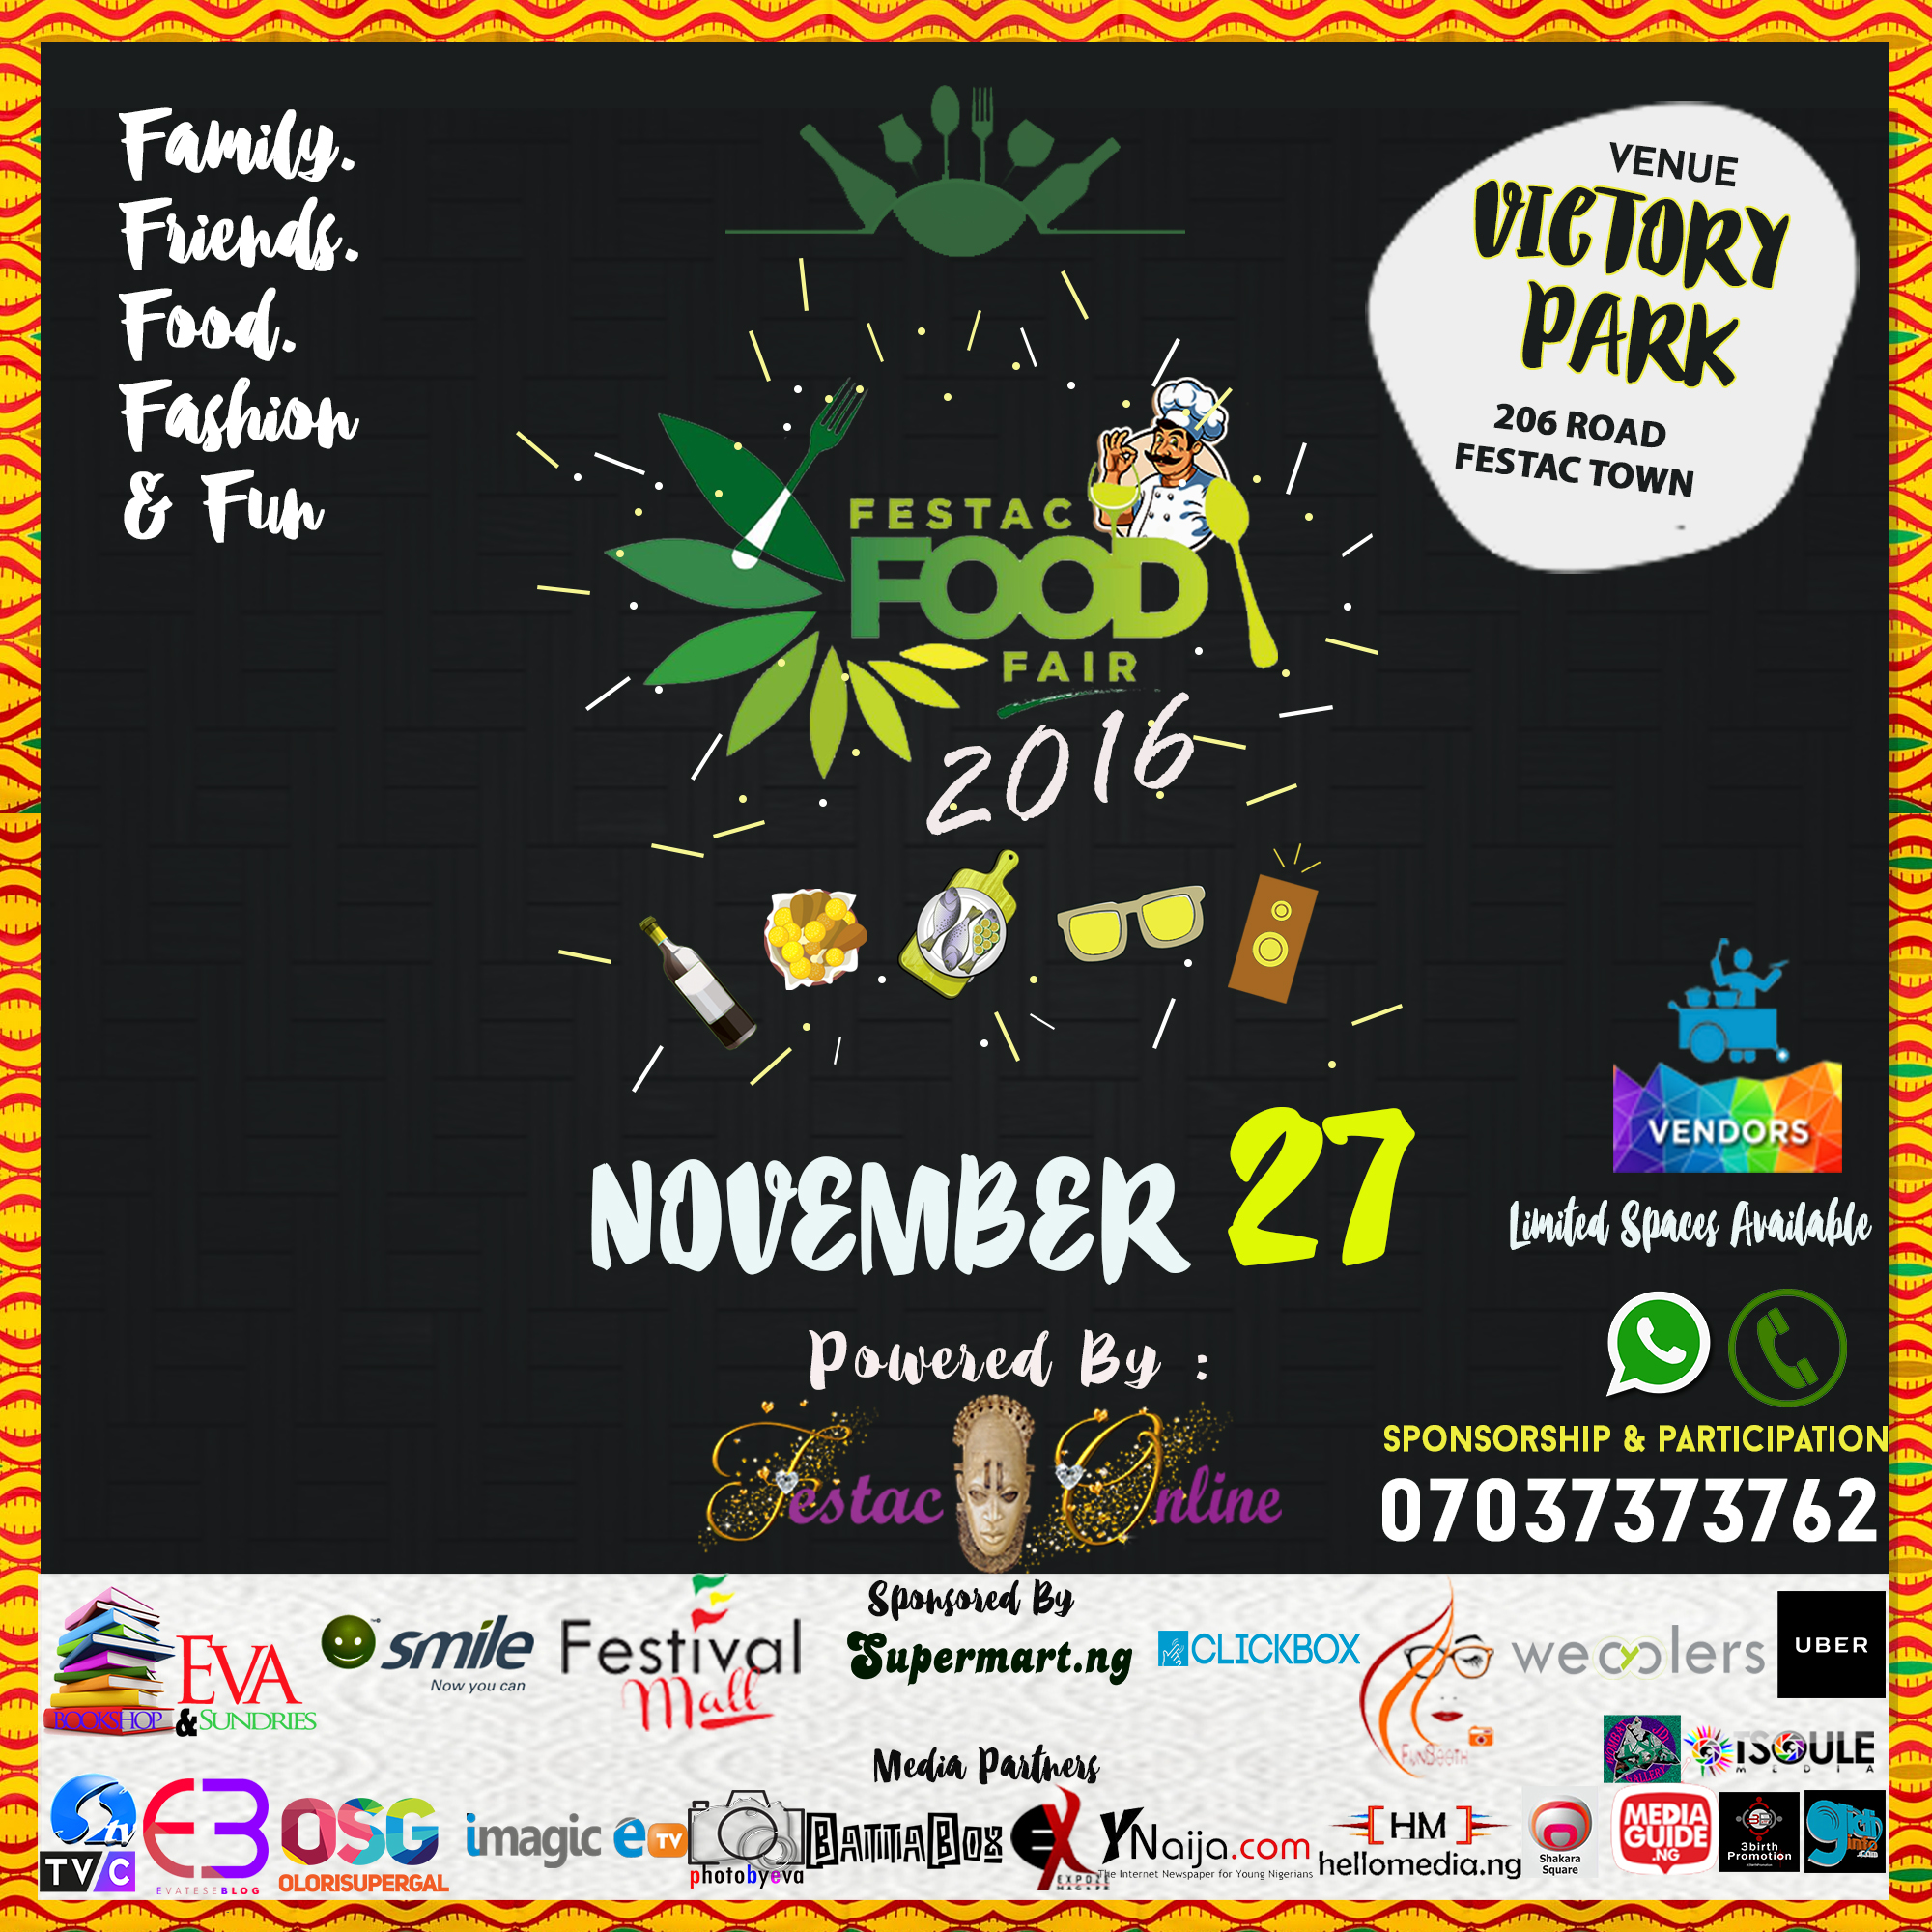 save-date-festac-food-fair-2016